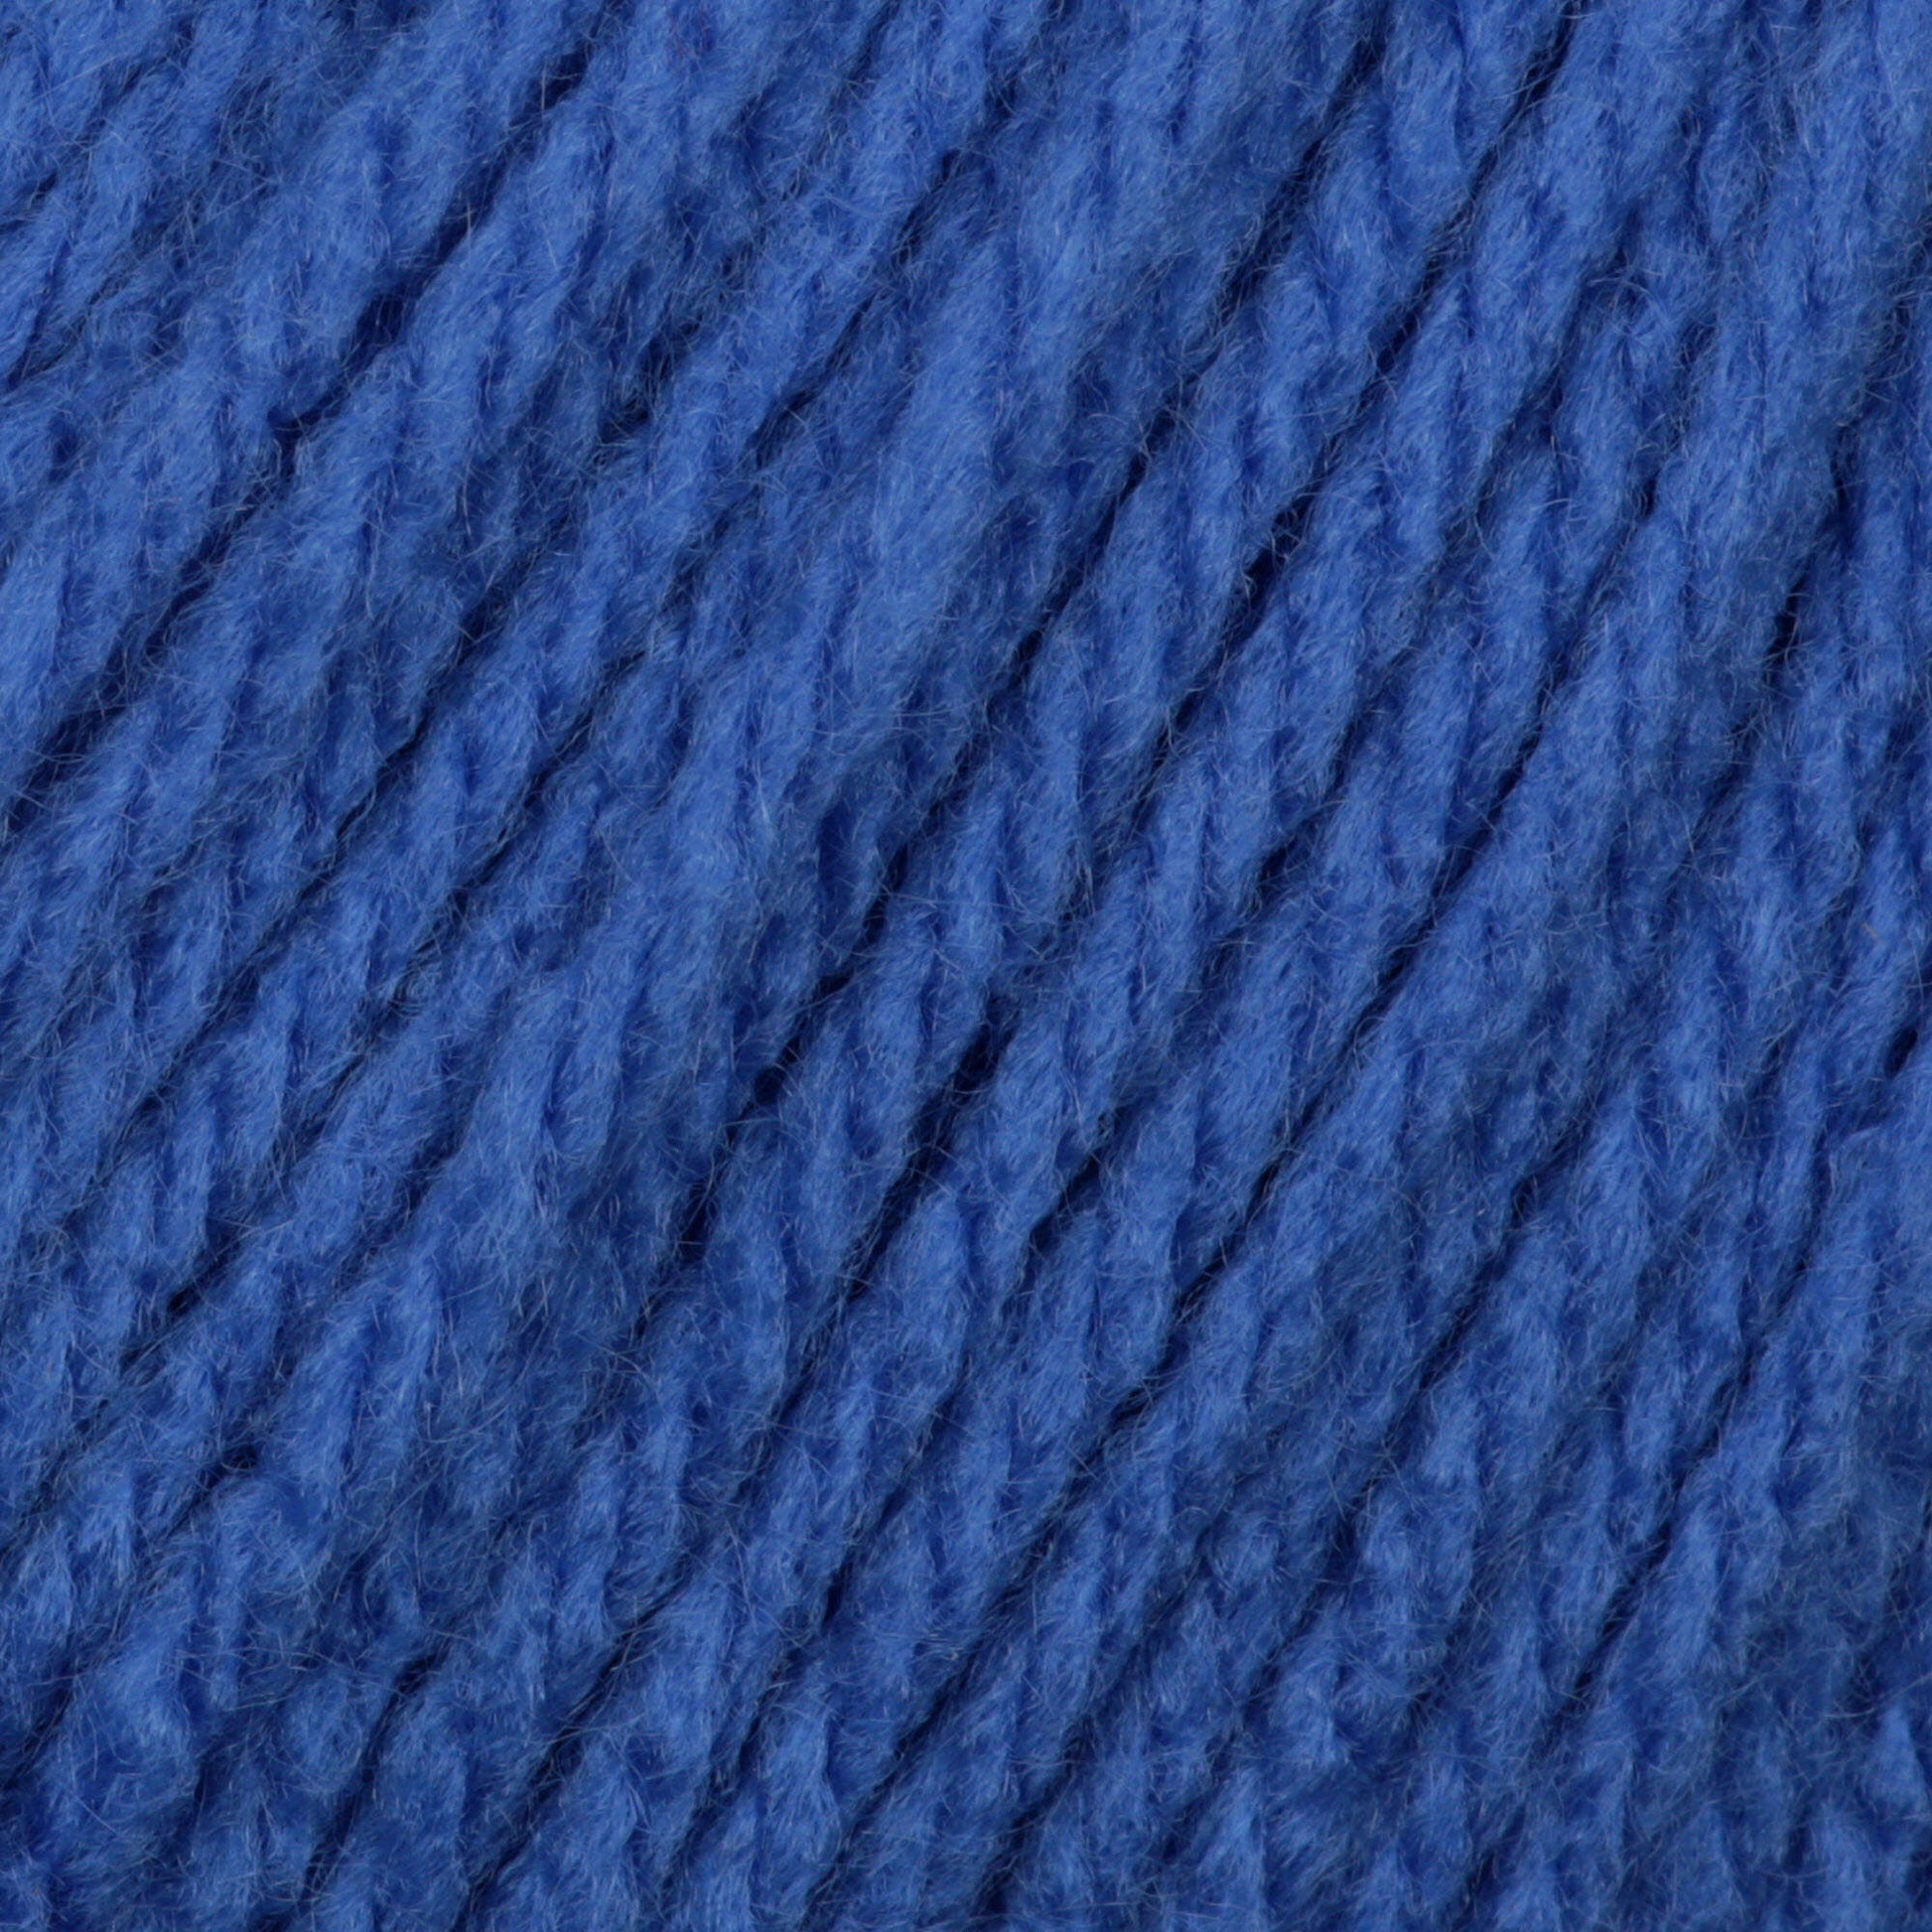 Phentex Worsted Yarn - Clearance shades